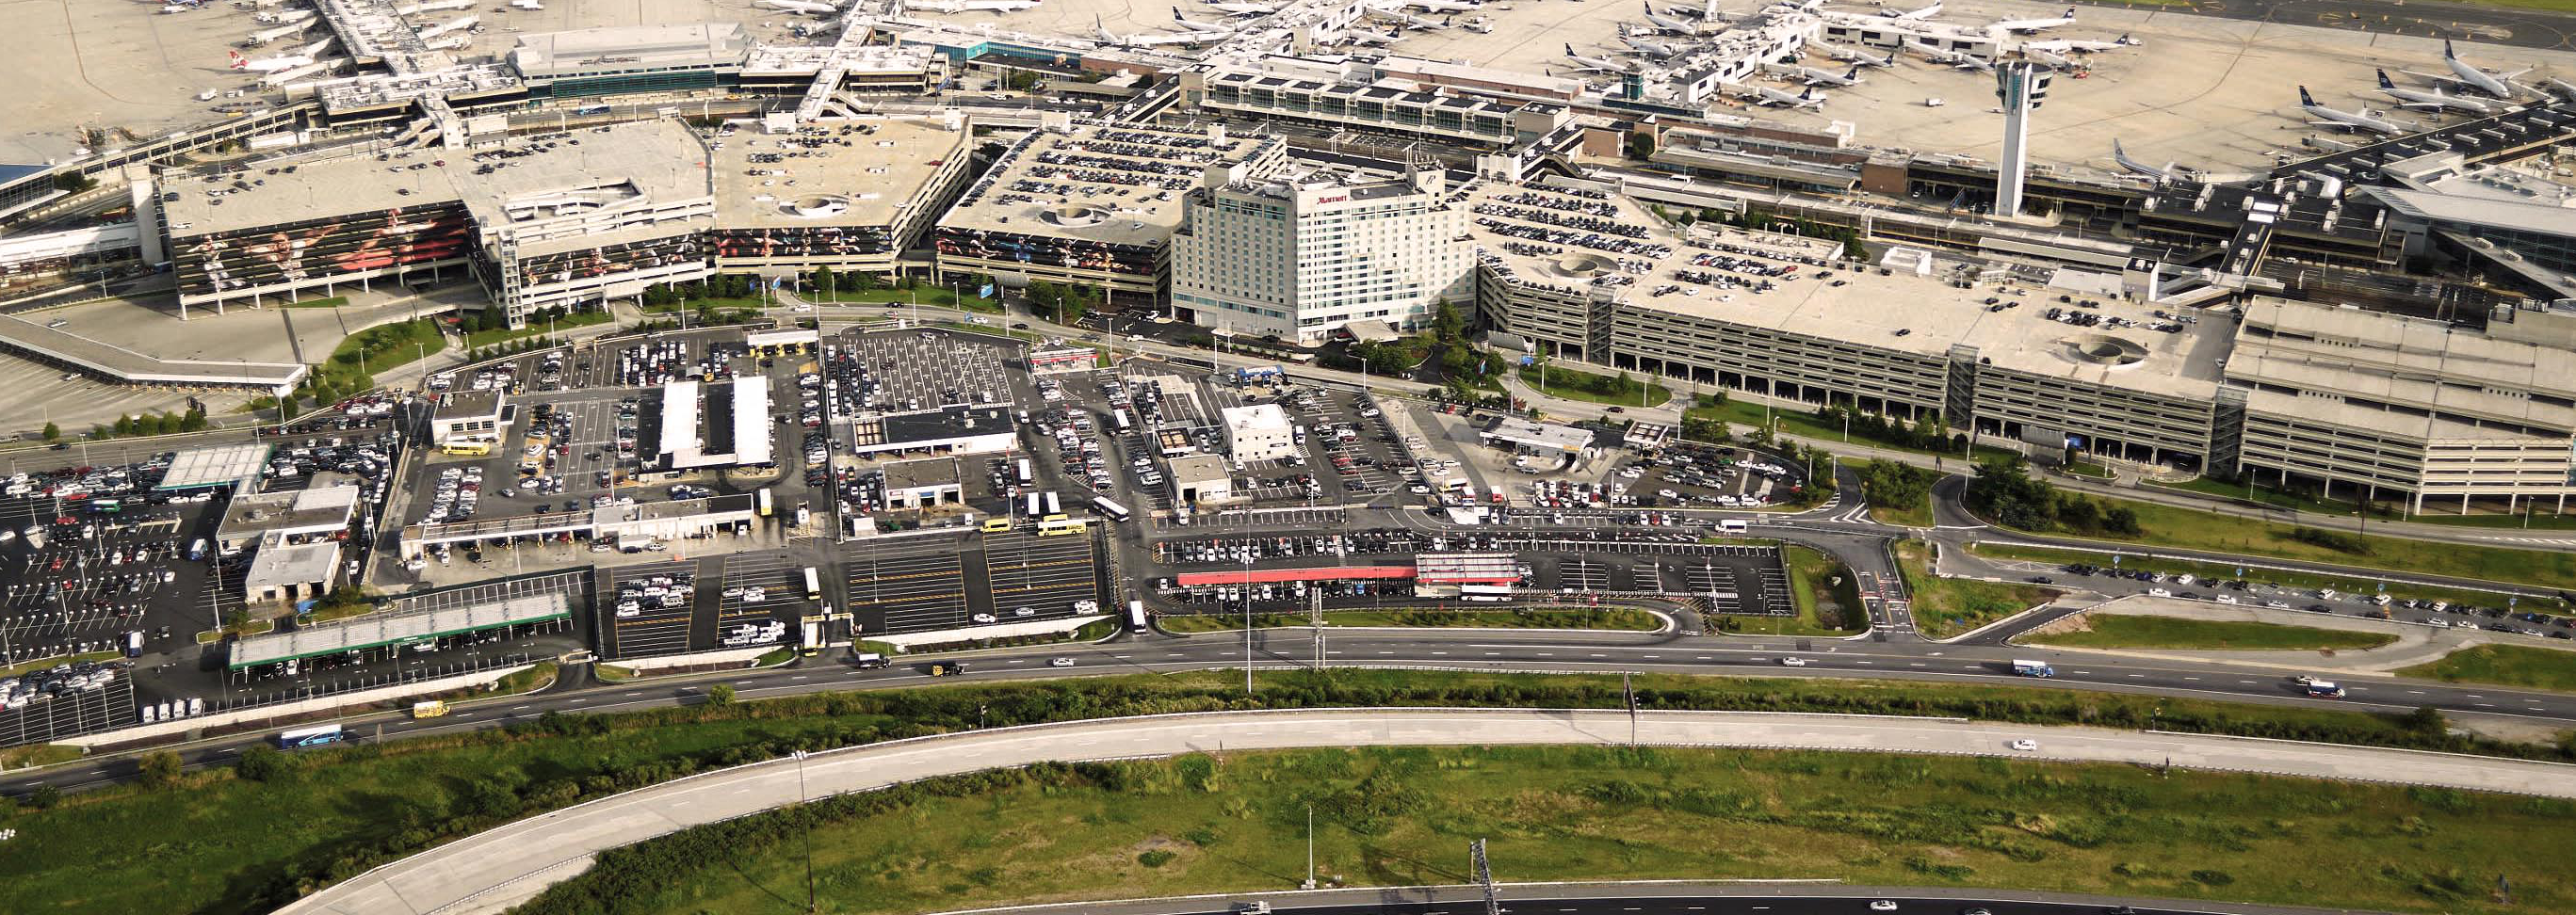 Overhead view of the Philadelphia Airport